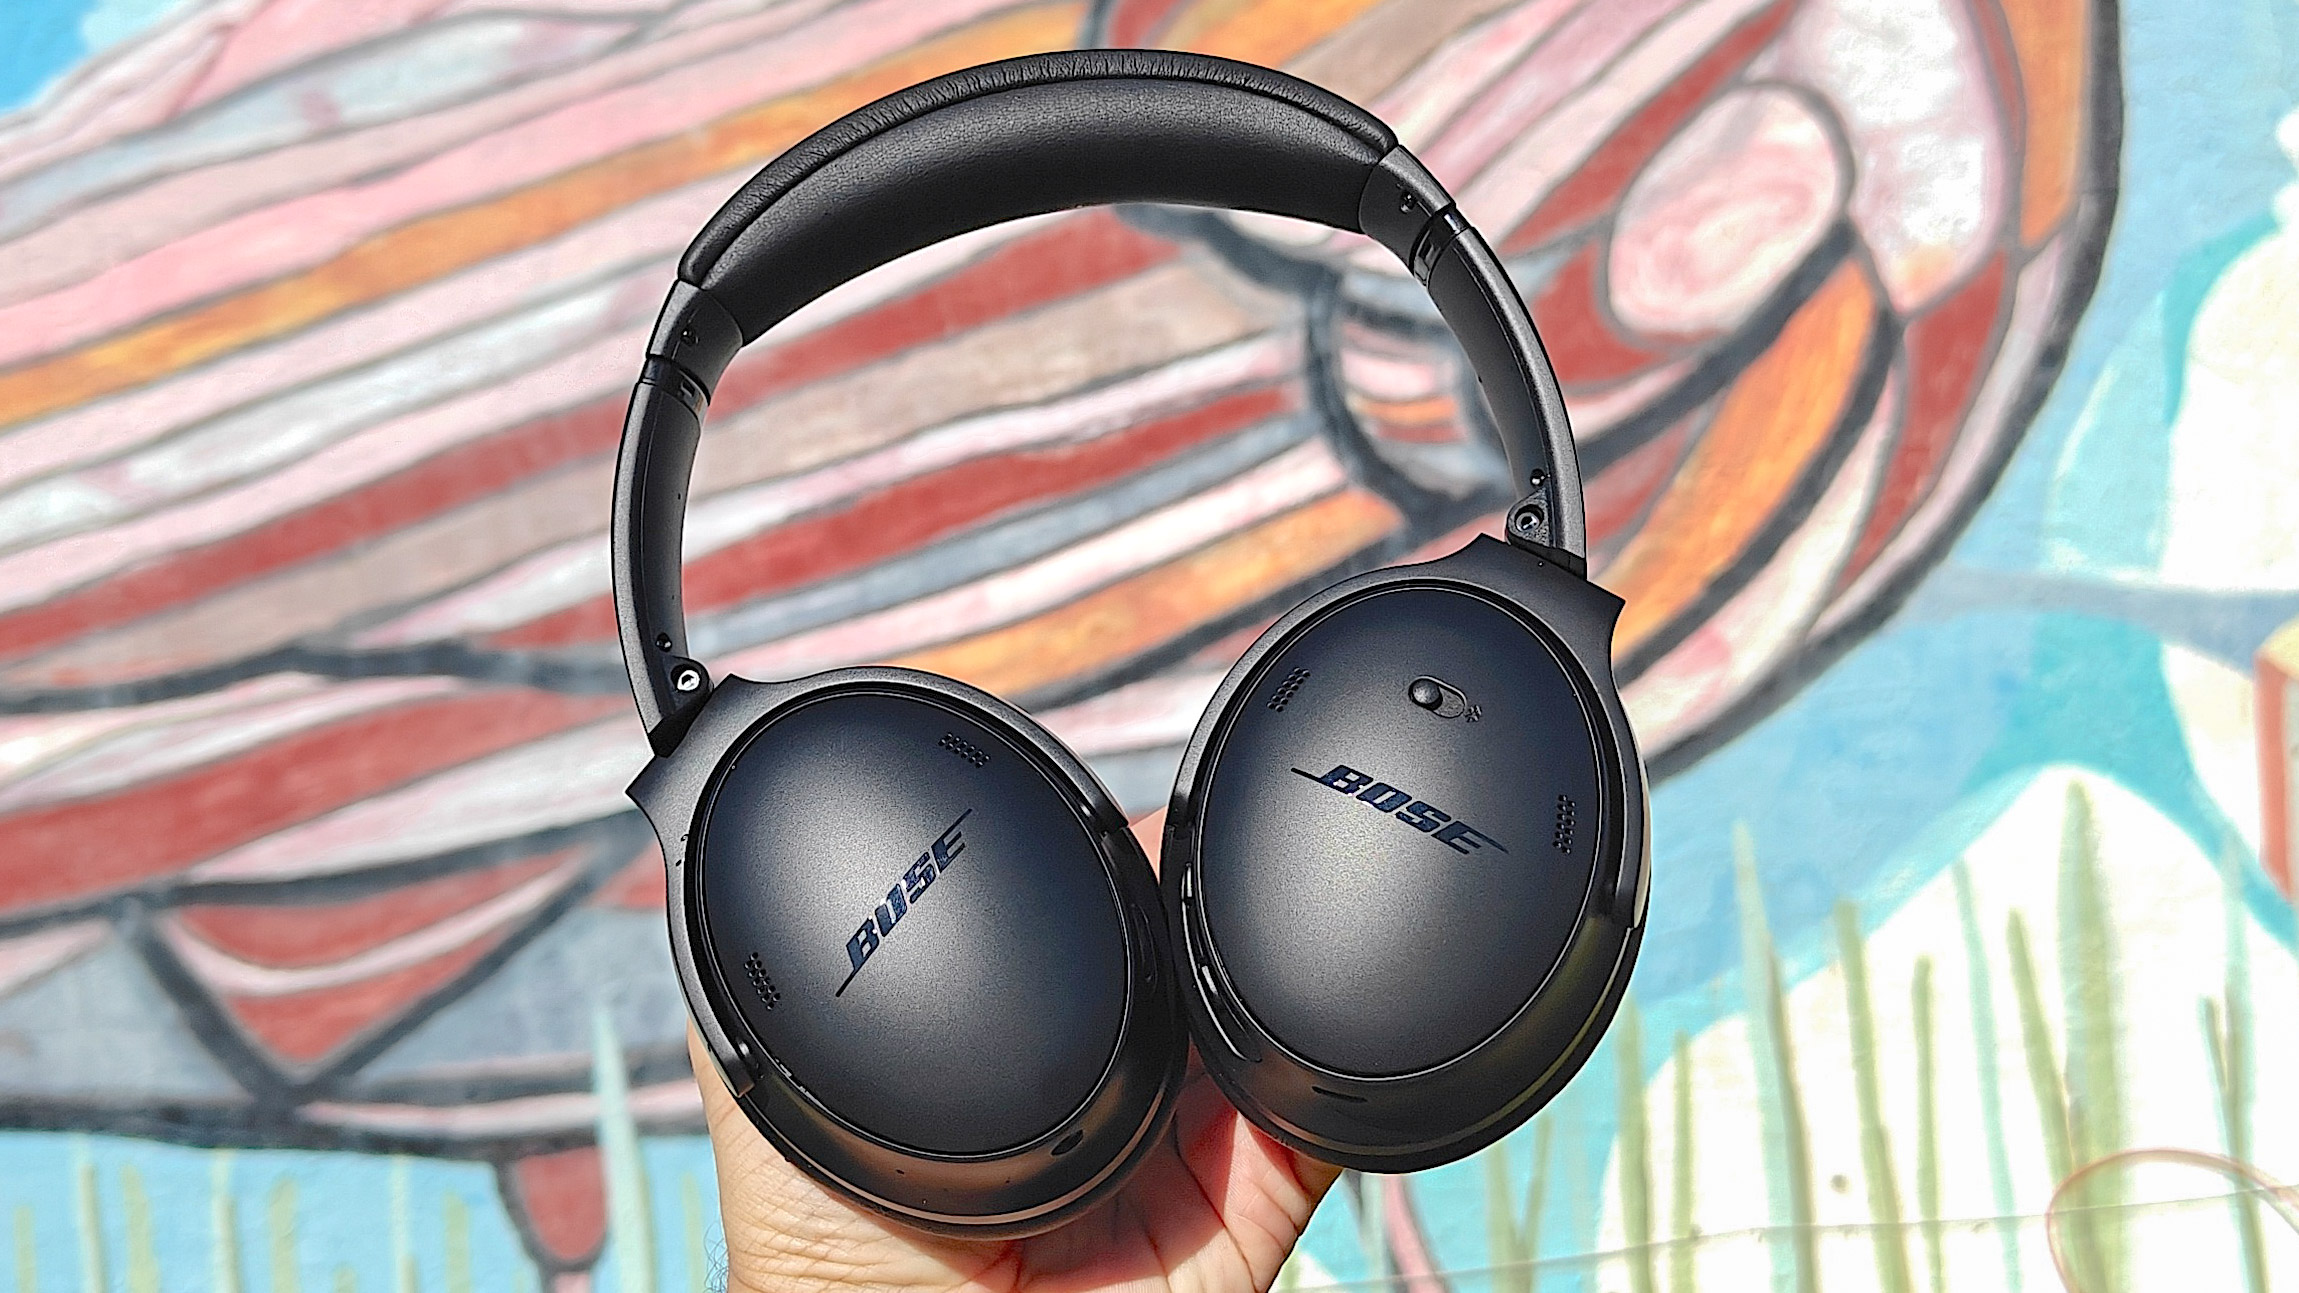 Bose QuietComfort Headphones held up against a painted backdrop